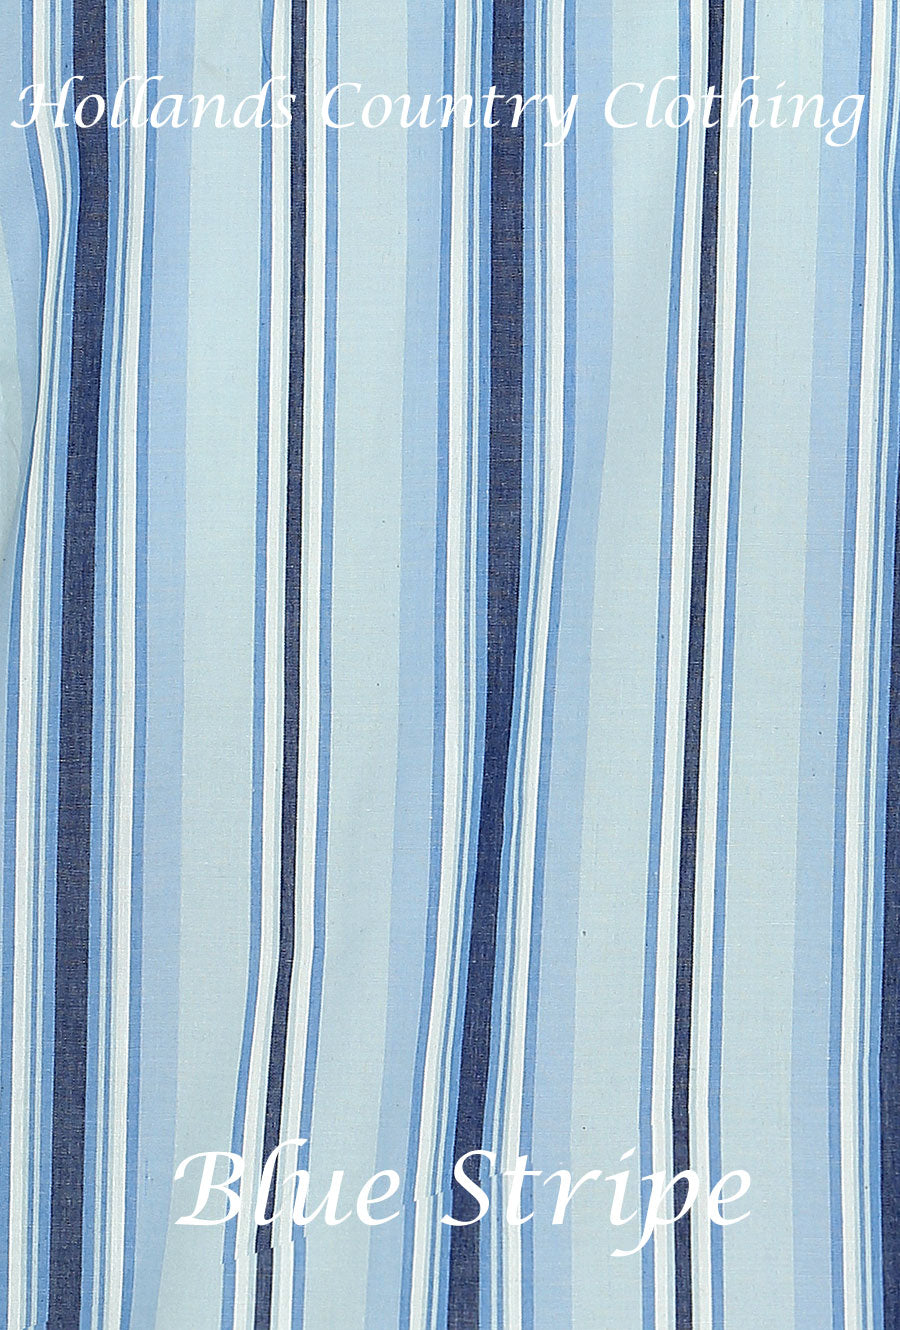 Blue stripe 